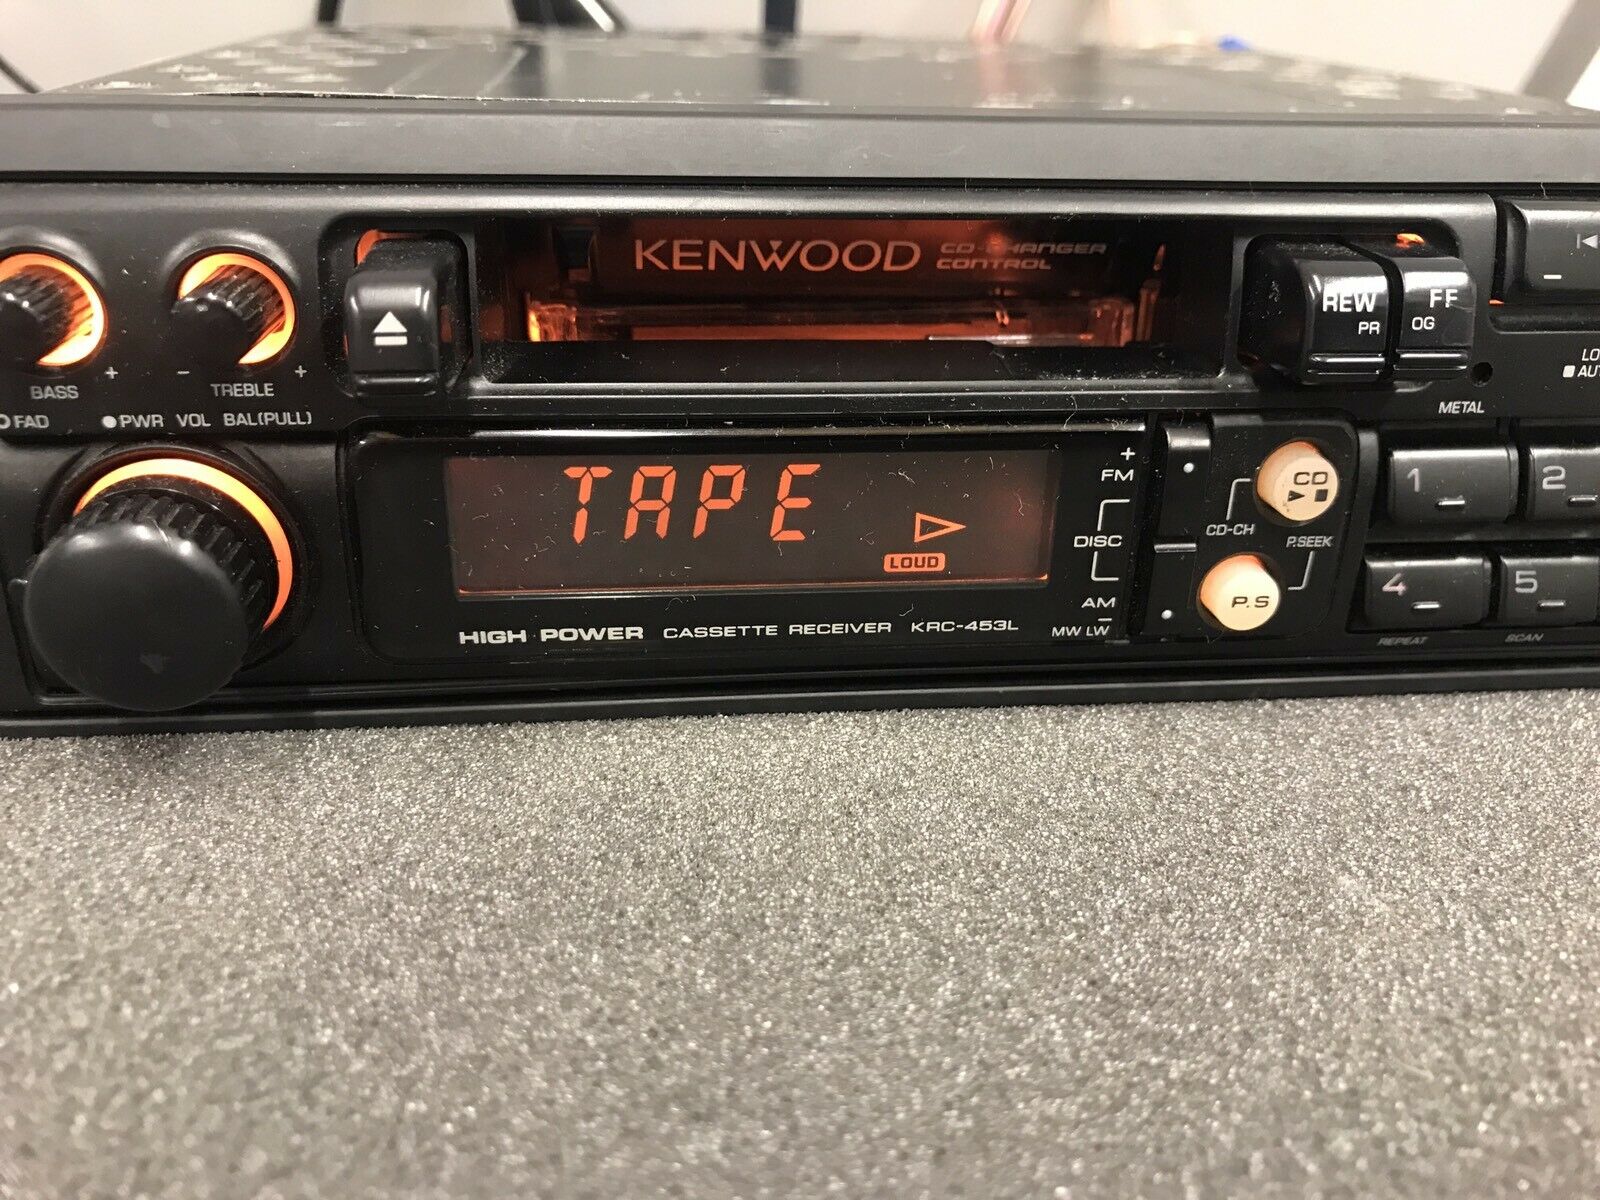 Kenwood 1990s Old Classic Vintage Retro Radio Cassette Player Model Krc-453L Cd